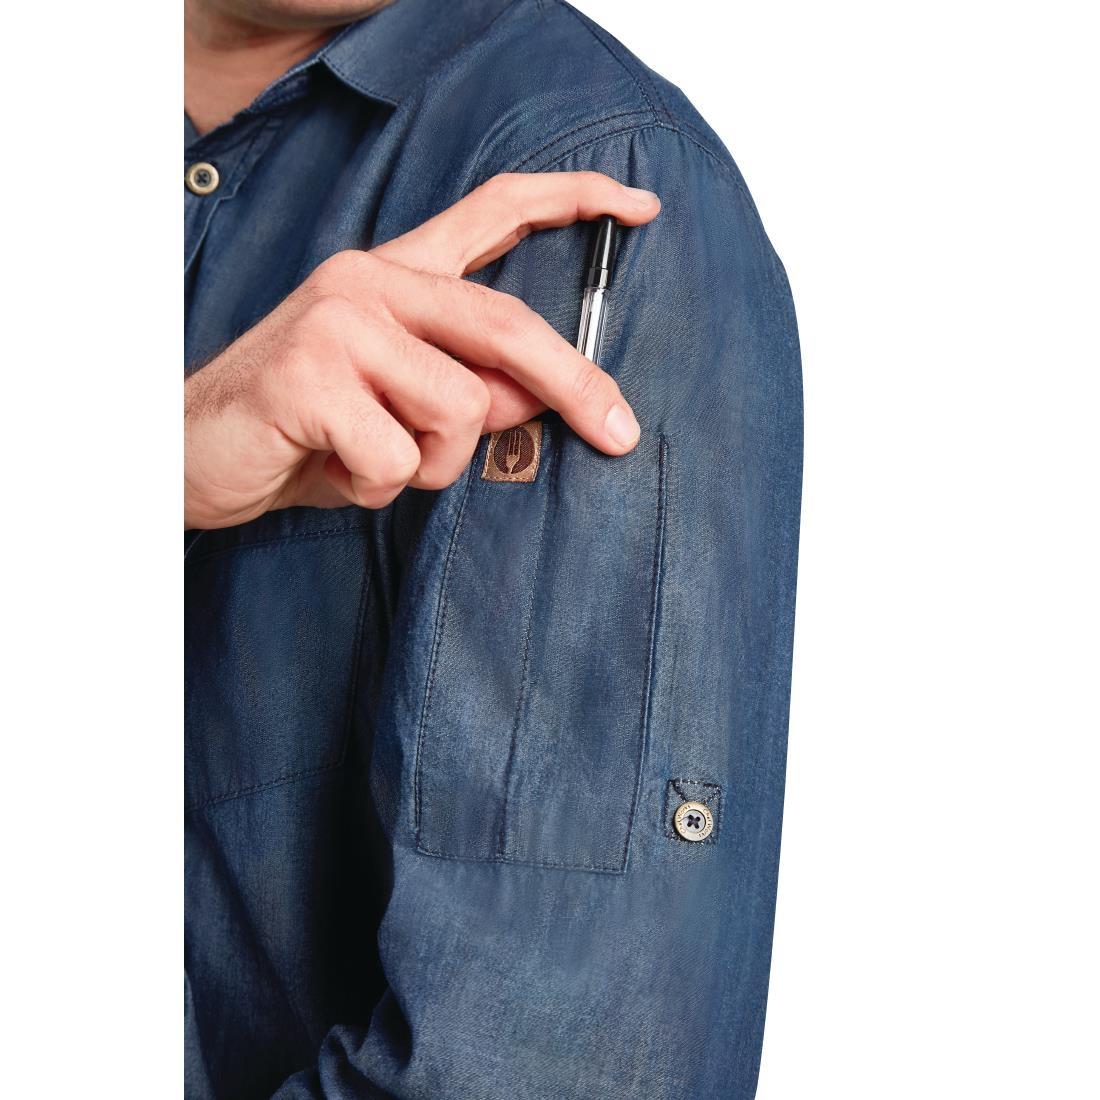 Chef Works Urban Detroit Long Sleeve Denim Shirt Blue XS - B776-XS  - 4